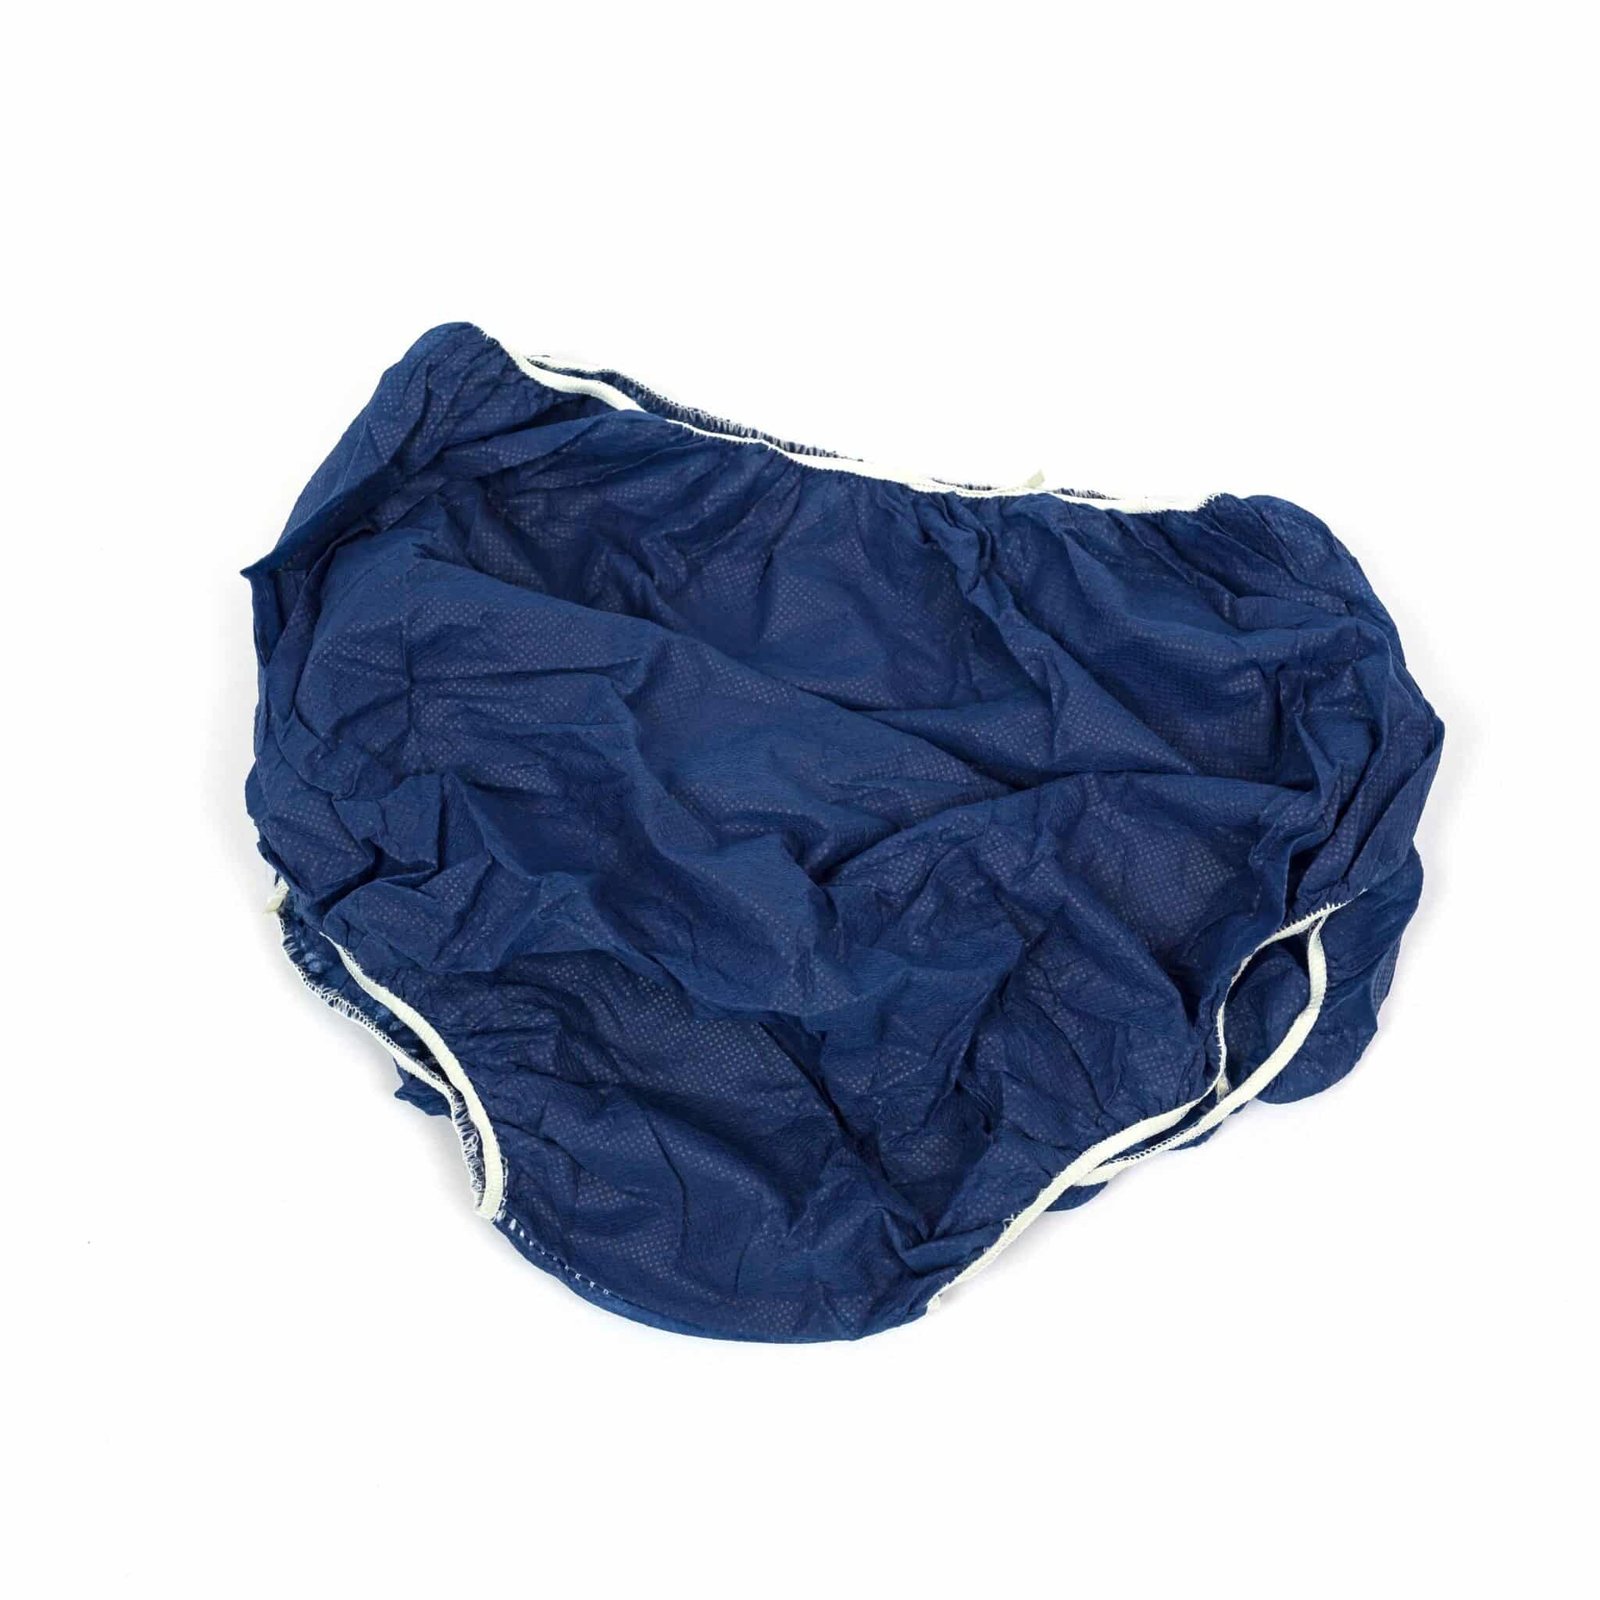 30 Pieces Disposable Underwear Women Non-woven Briefs Handy Paper P